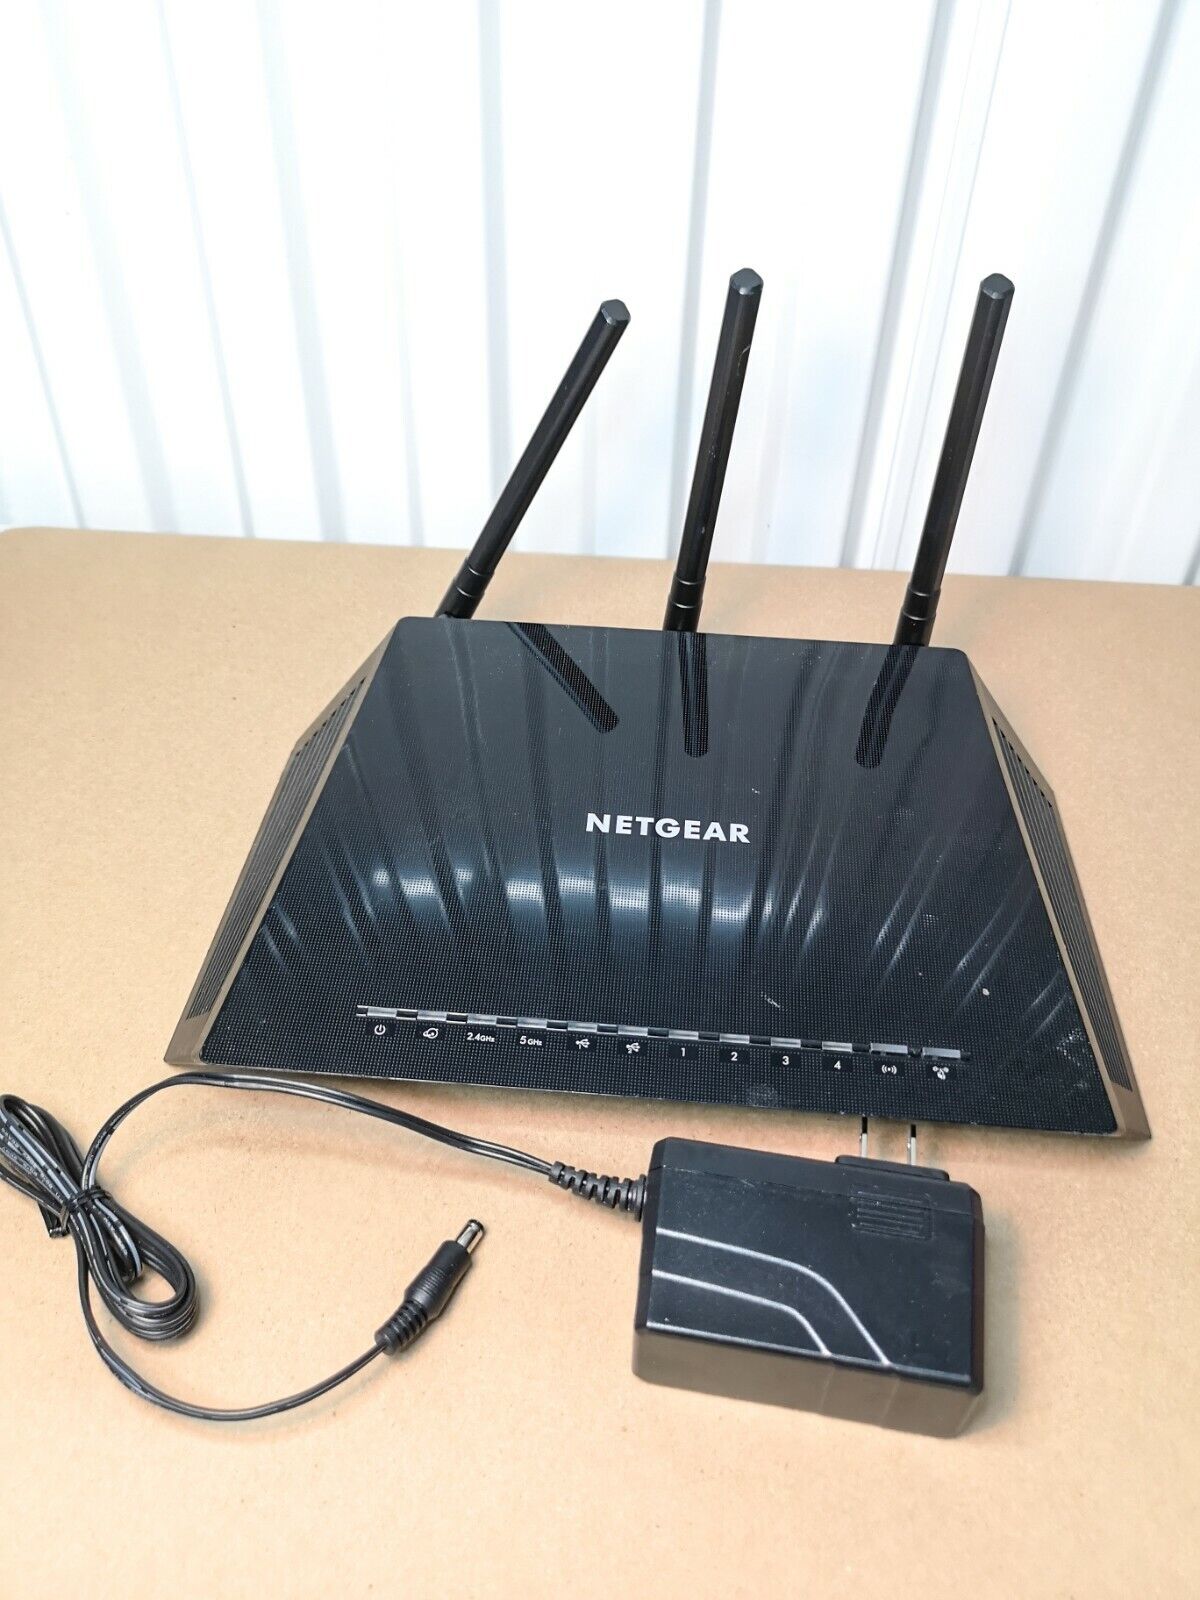 NETGEAR R6400v2 AC1750 - Smart Wi-Fi Router 802.11ac Dual Band Gigabit - Tested